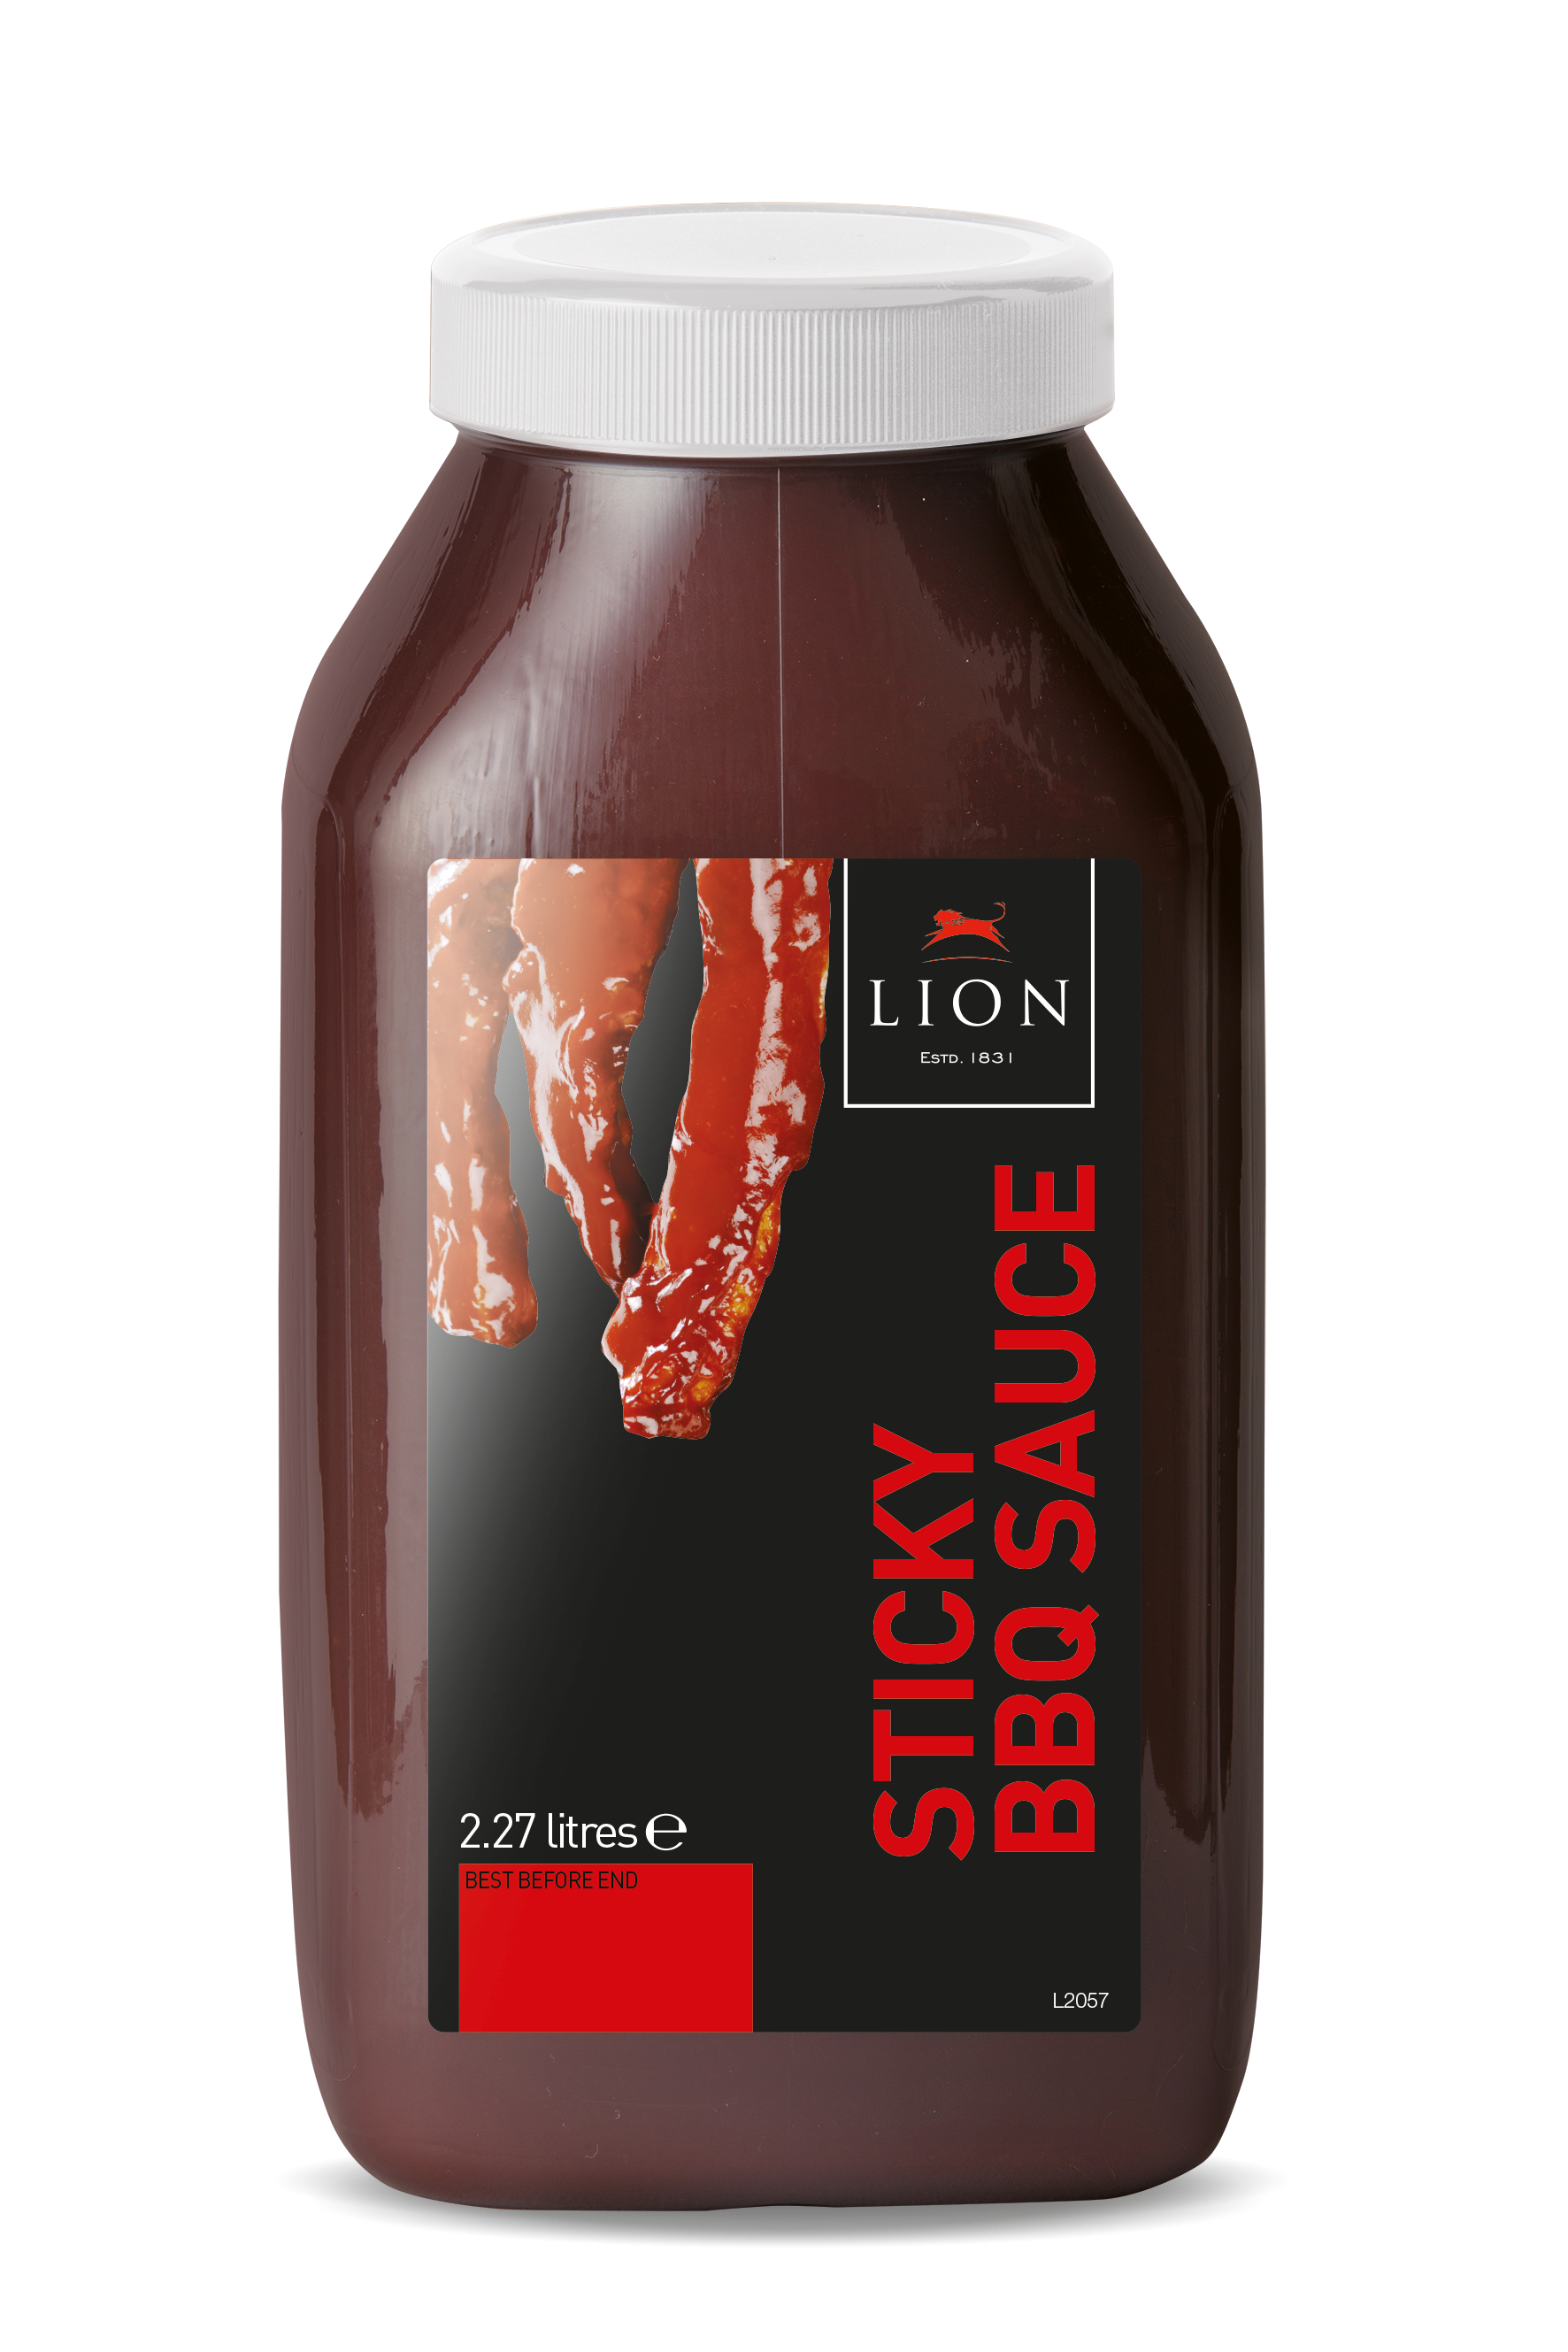 Lion Sticky BBQ Sauce 2 27 L White Lid